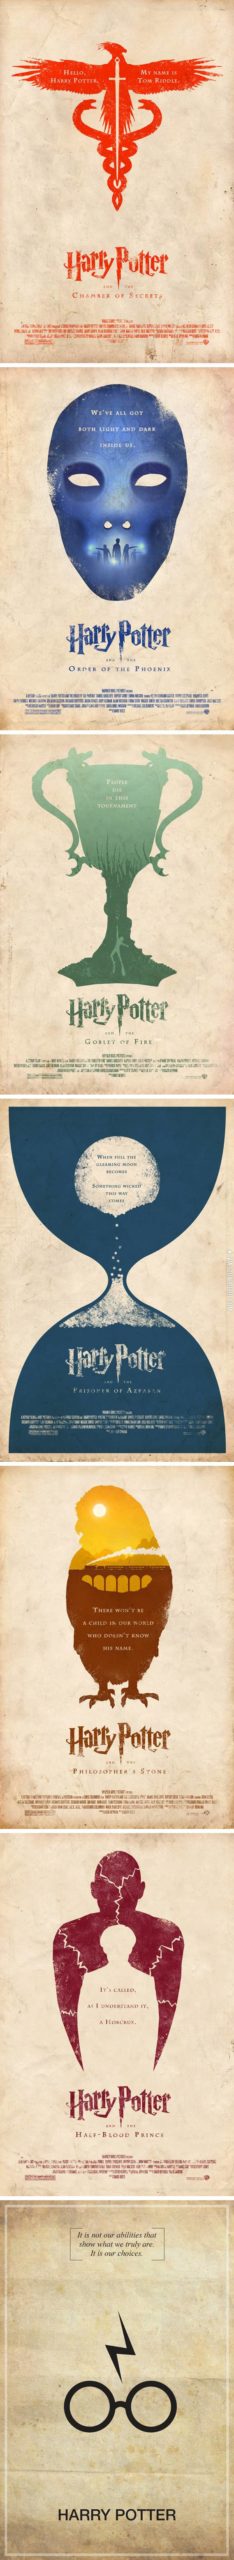 Alternate+Harry+Potter+movie+posters.